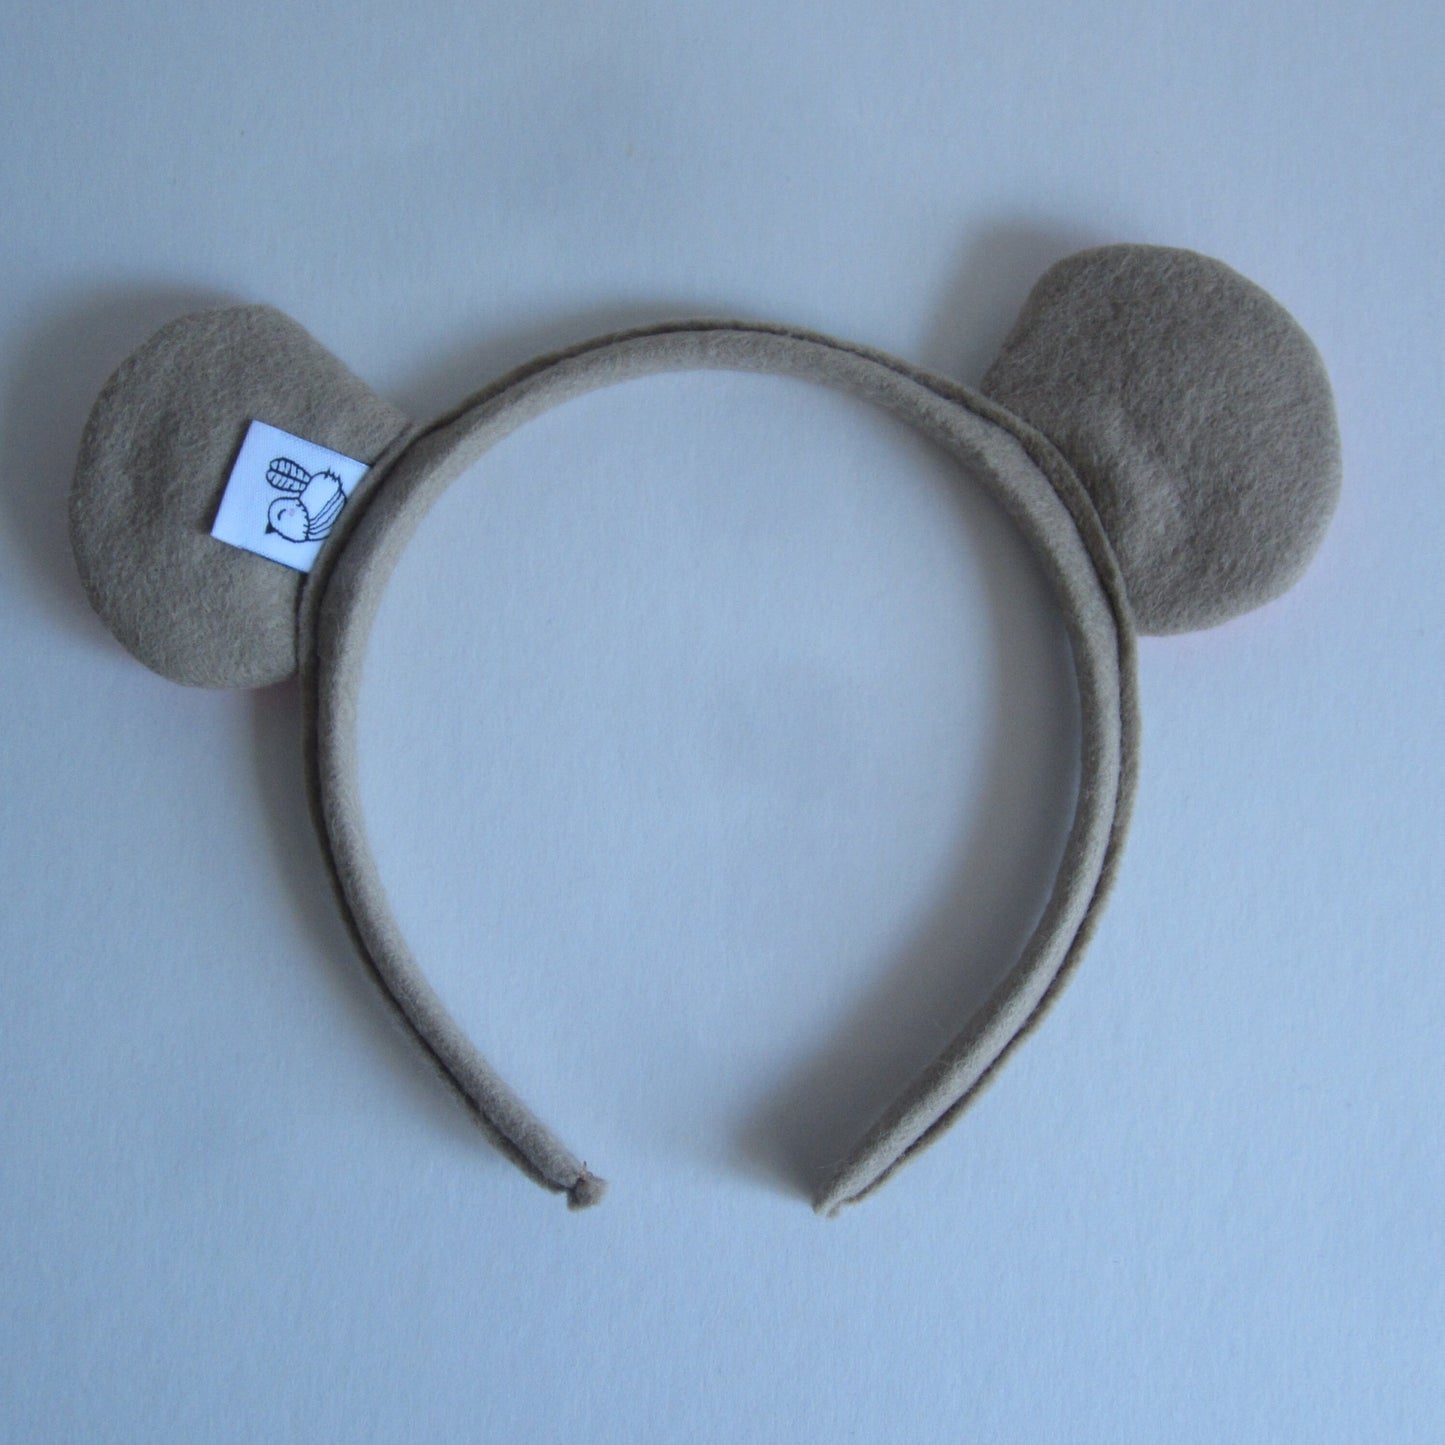 Mouse Ears Hairband Made of Beige Coloured Felt